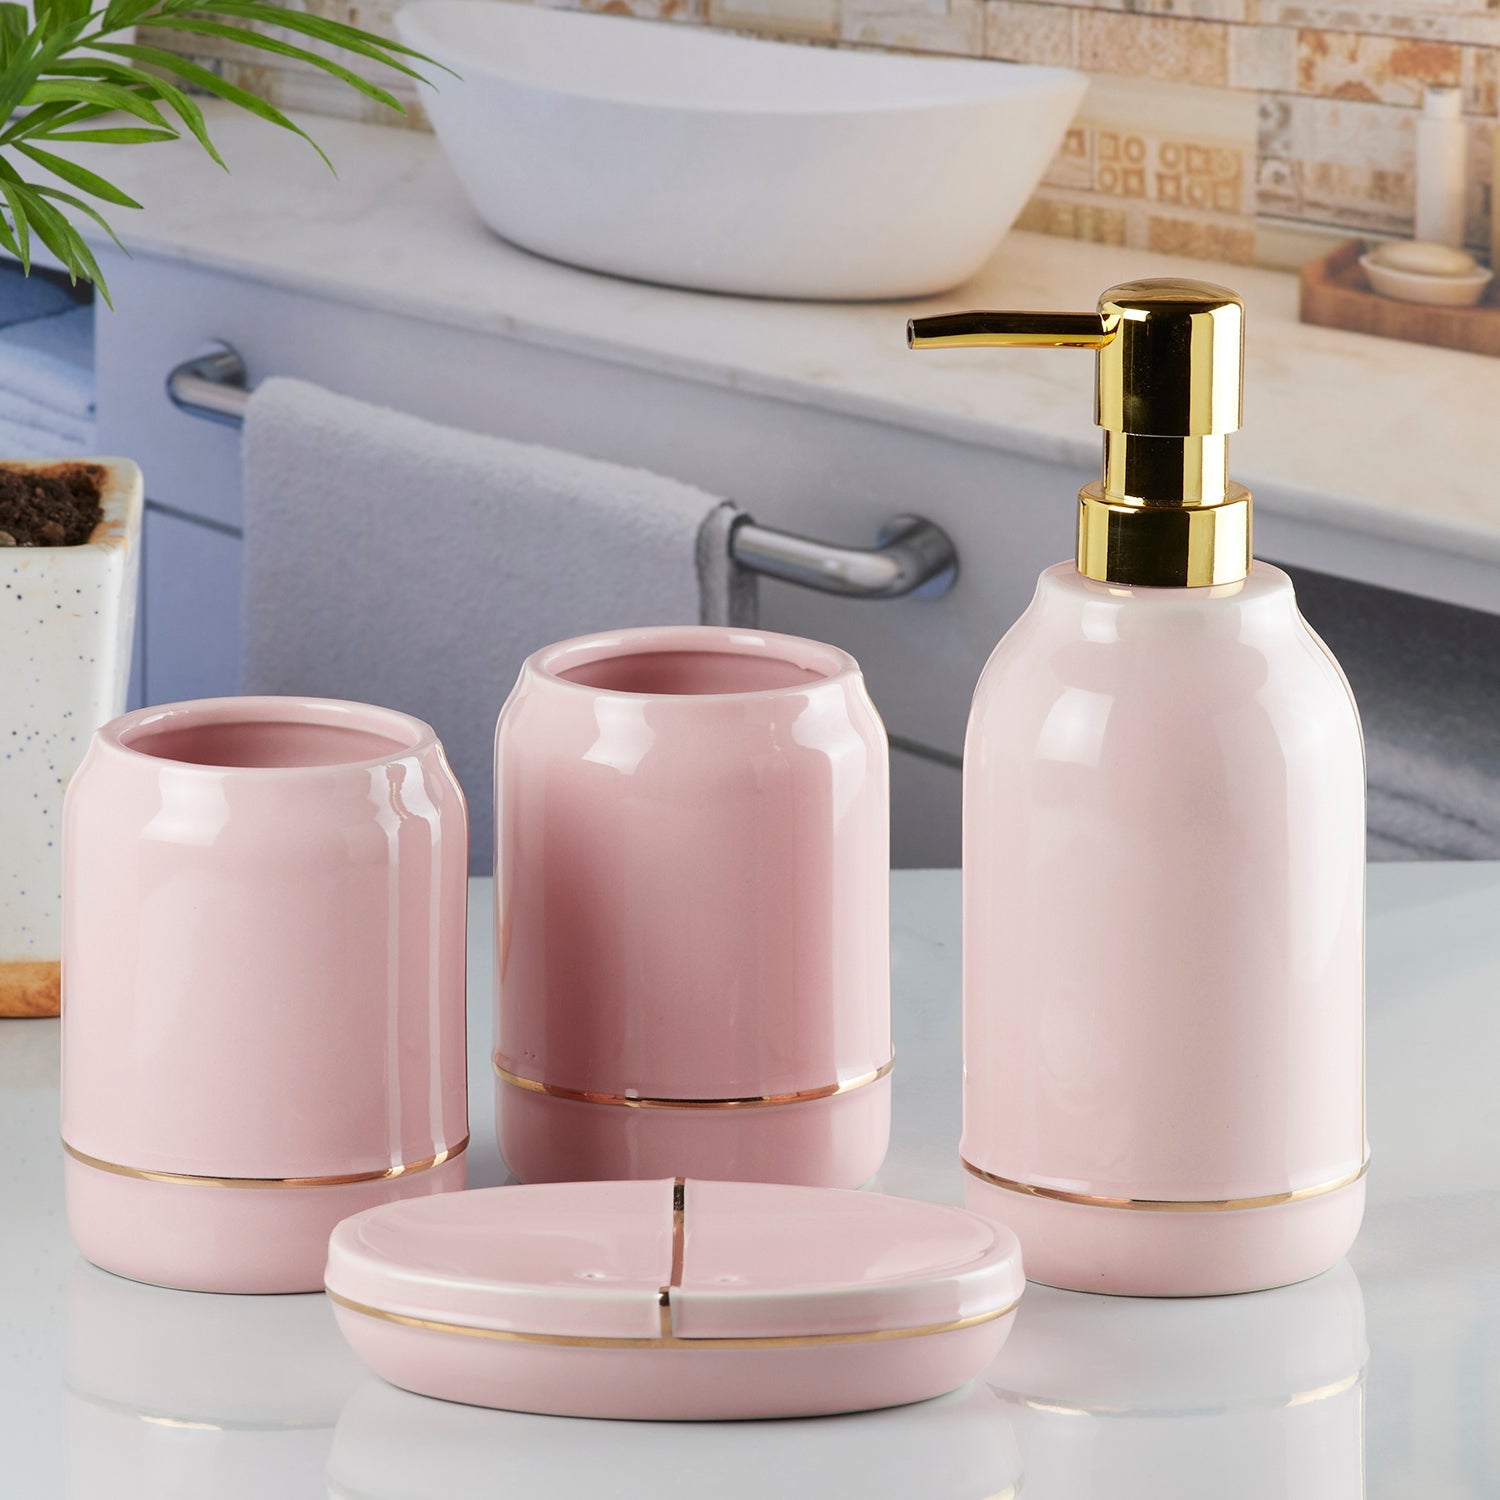 Ceramic Bathroom Accessories Set of 4 Bath Set with Soap Dispenser (8488)